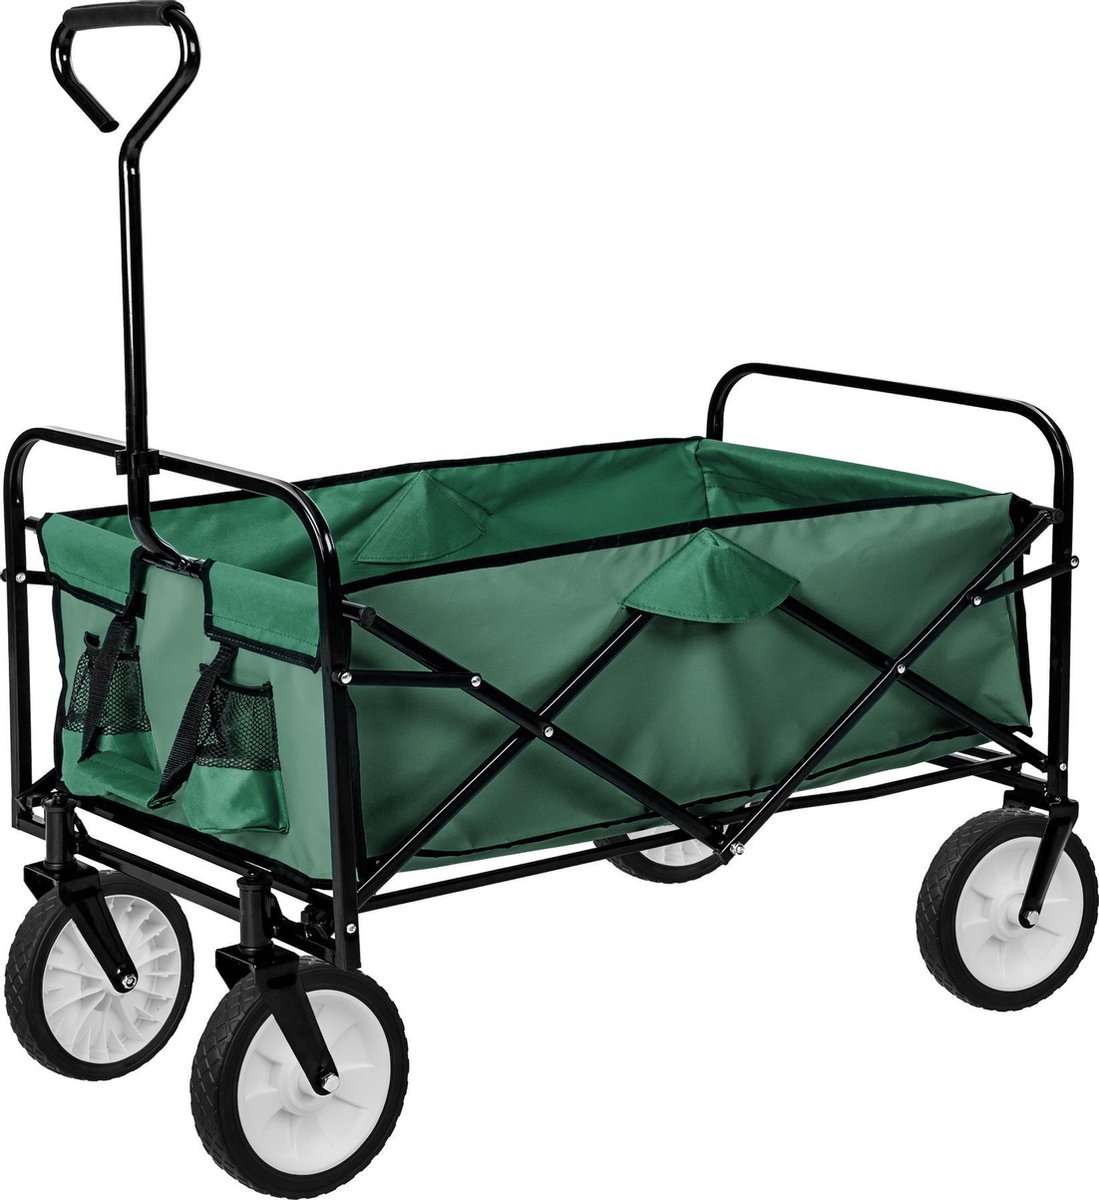 Bolderkar bolderwagen transportkar - opvouwbaar - groen - 402596 | bol